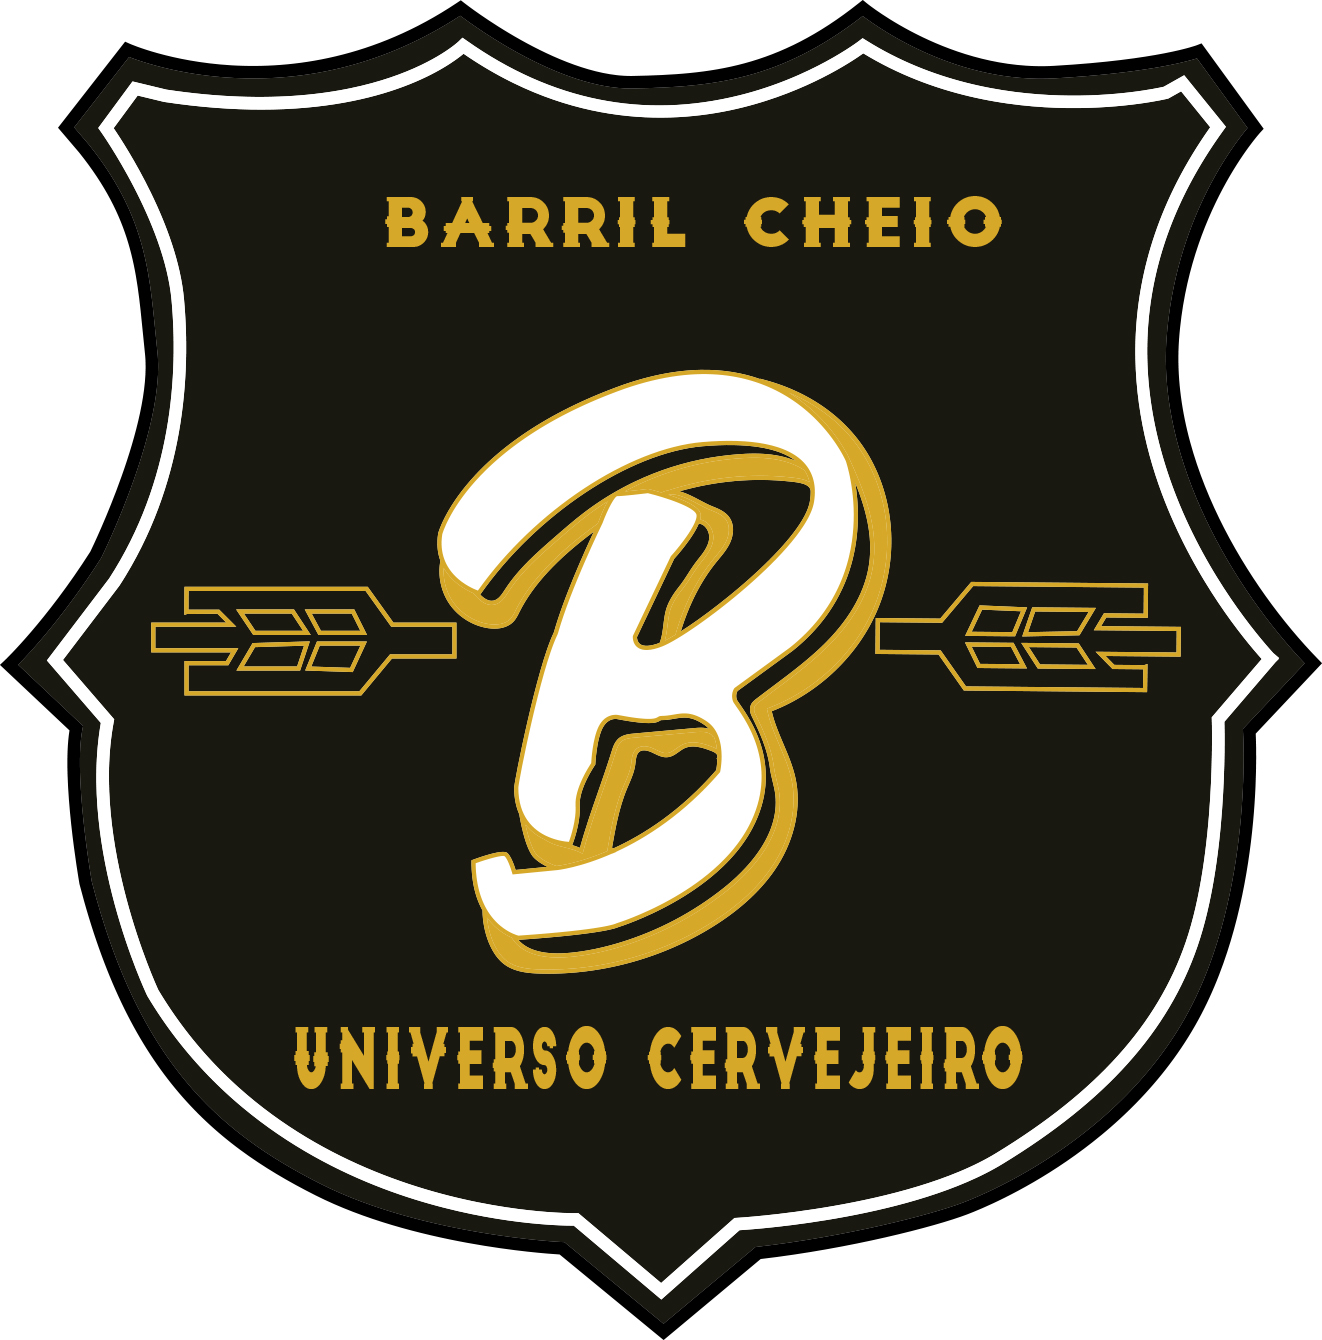 Barril Cheio Uc